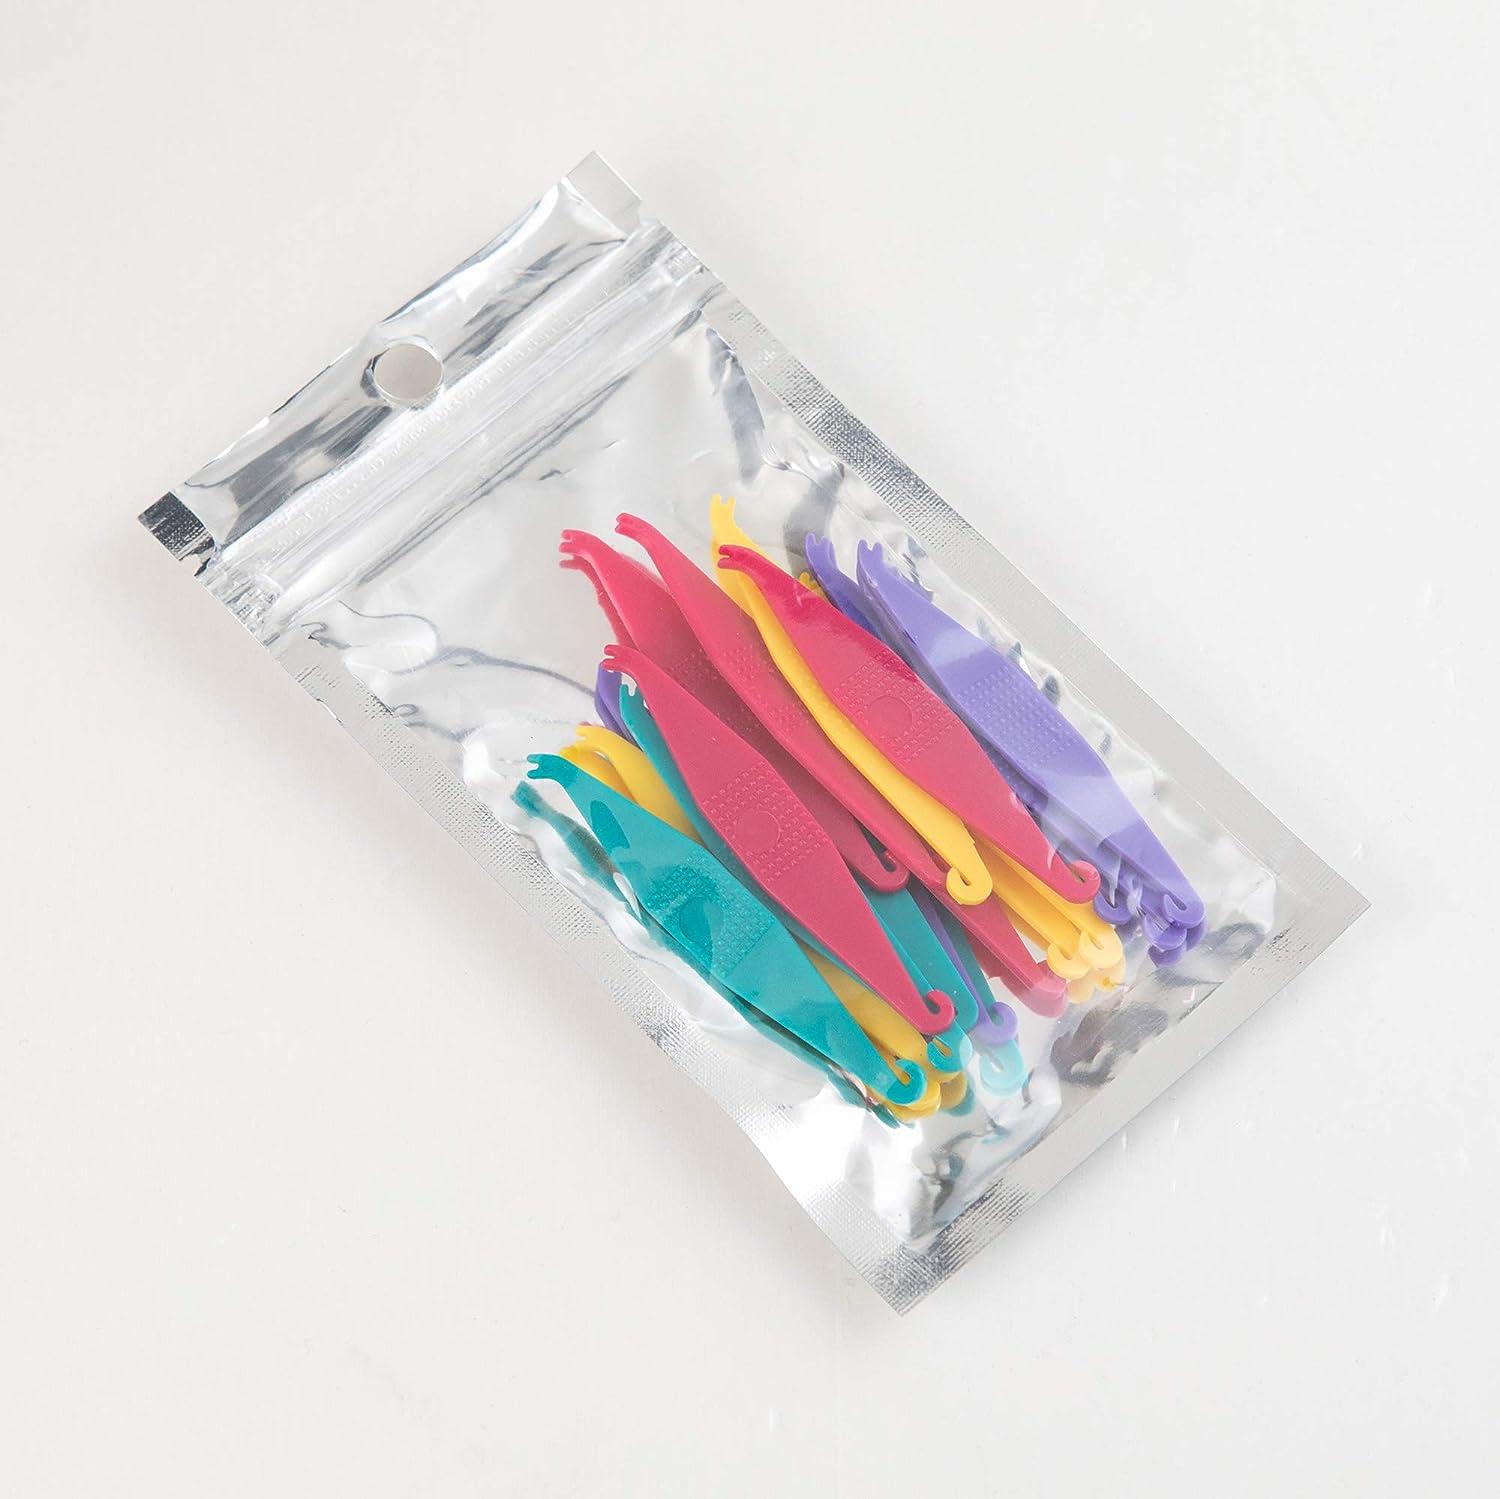 Dental Elastic Rubber Bands Placers for Braces Disposable Plastic